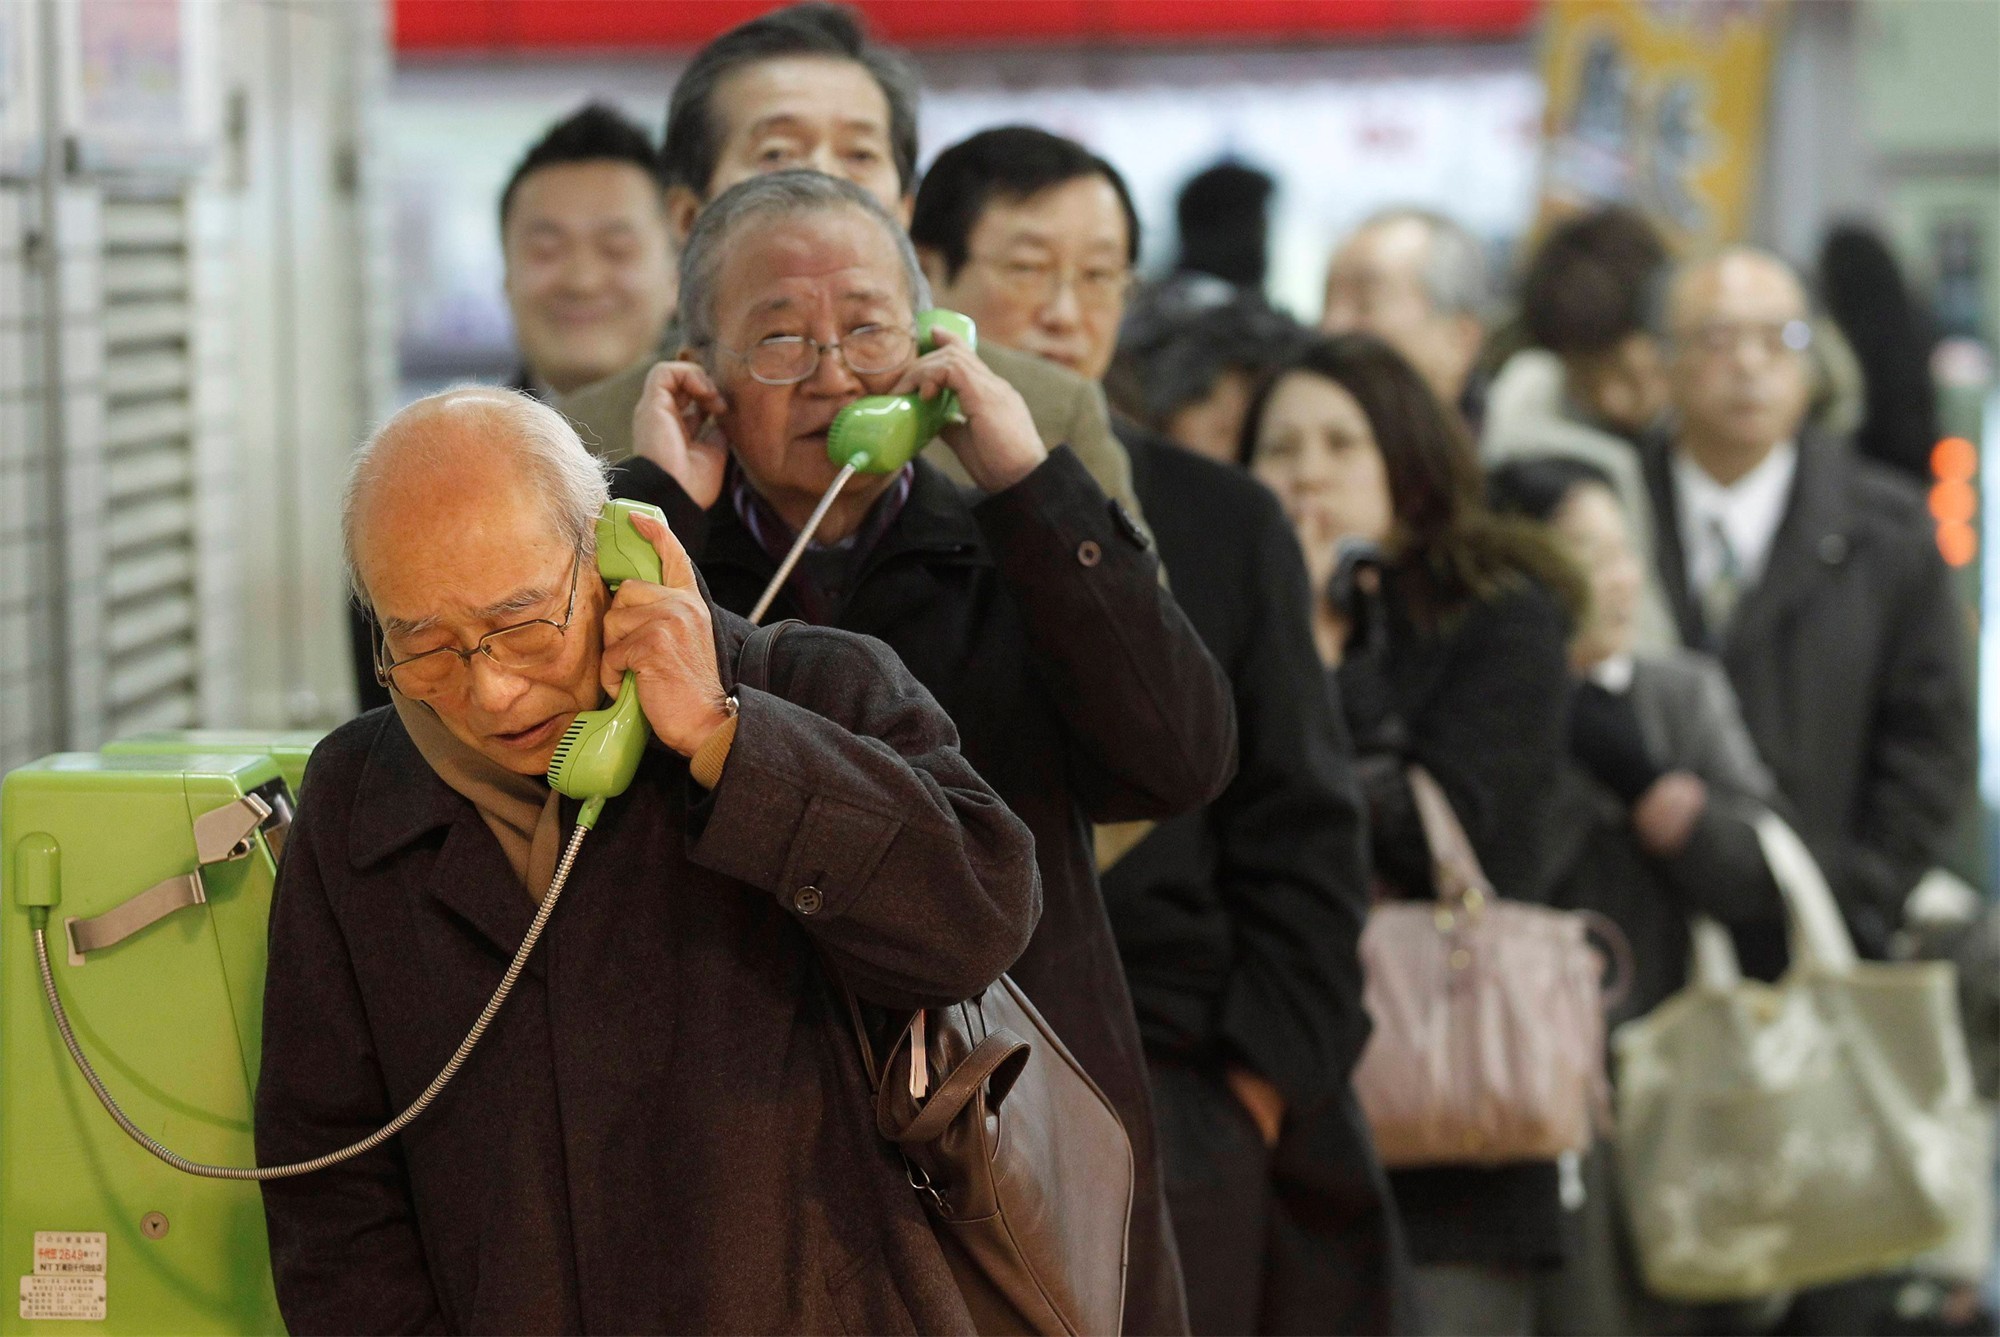 People 2000x1337 Japan crowds queue depth of field phone men women purse men with glasses standing old people japanese man Japanese bald